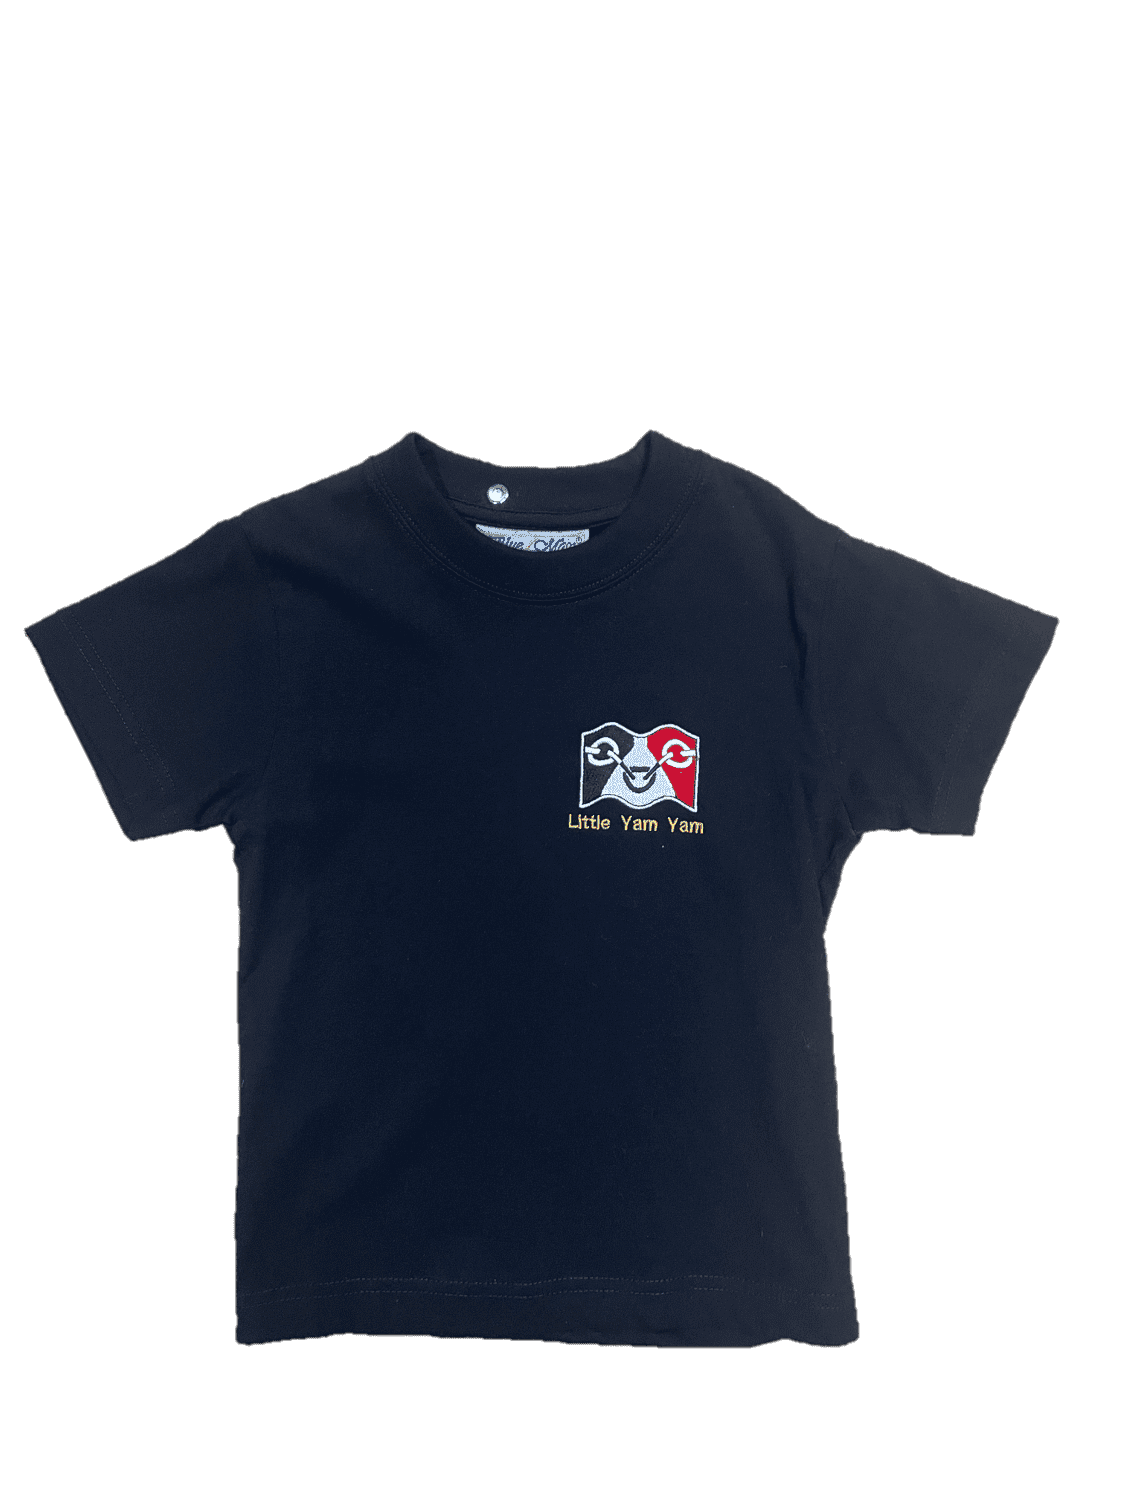 'Little Yam Yam' Black Country Kids T-shirt (Unisex) - Black - DANCERS